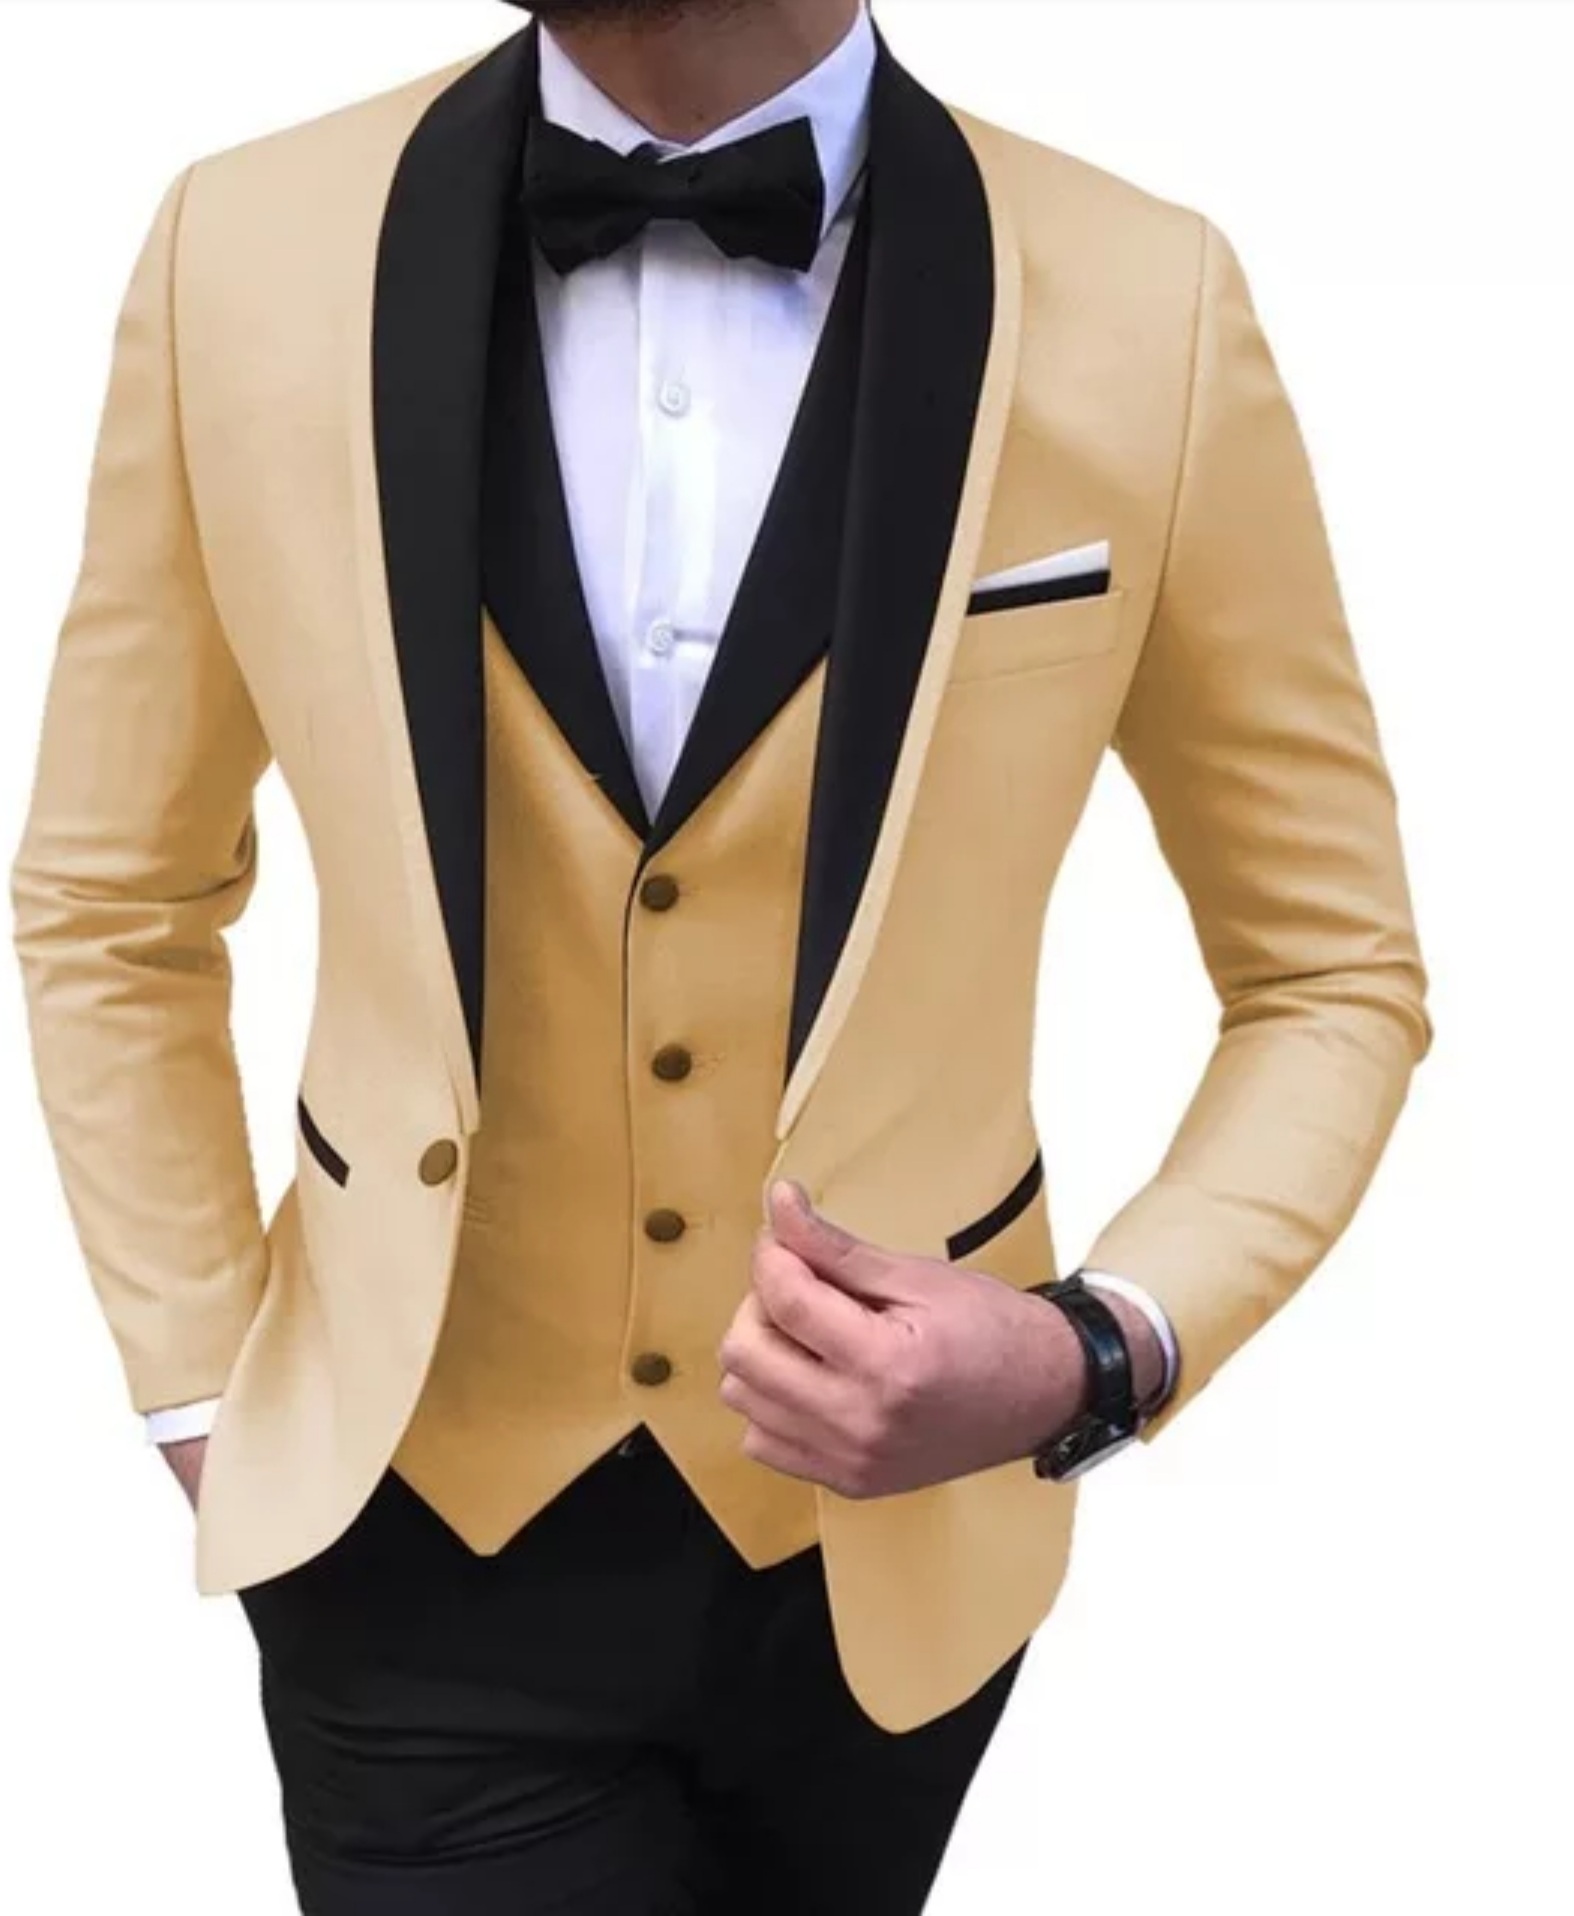 027 - Suits Rental in Singapore - Rent a Suit - Suits Hire